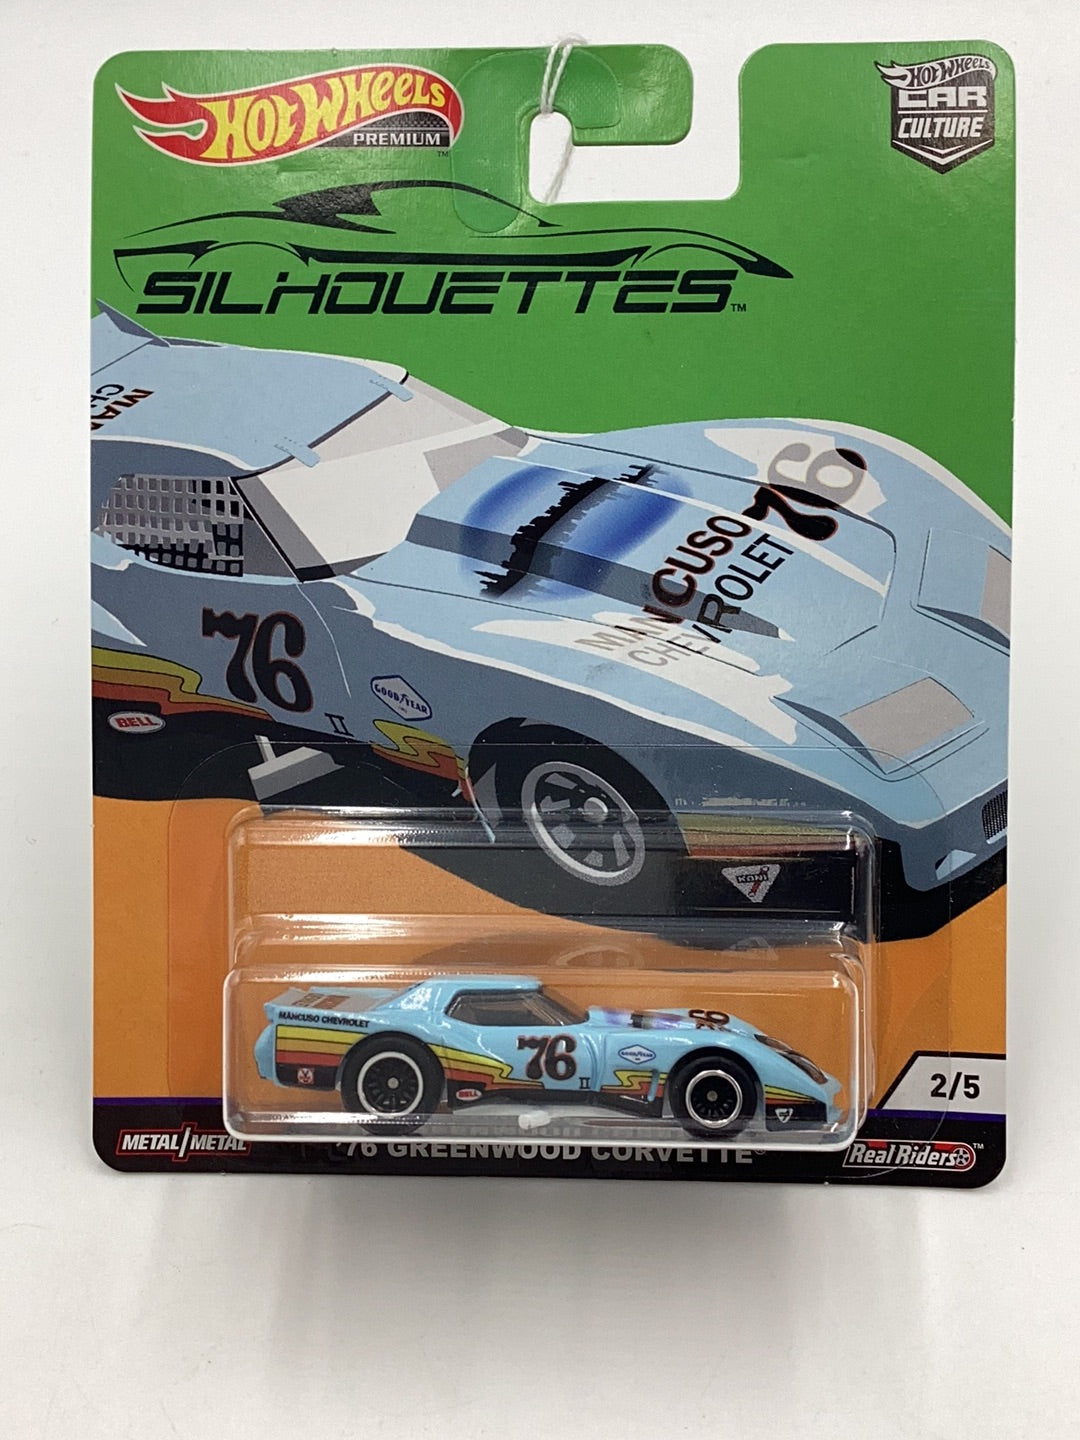 Hot Wheels car culture silhouettes #2 76 Greenwood Corvette